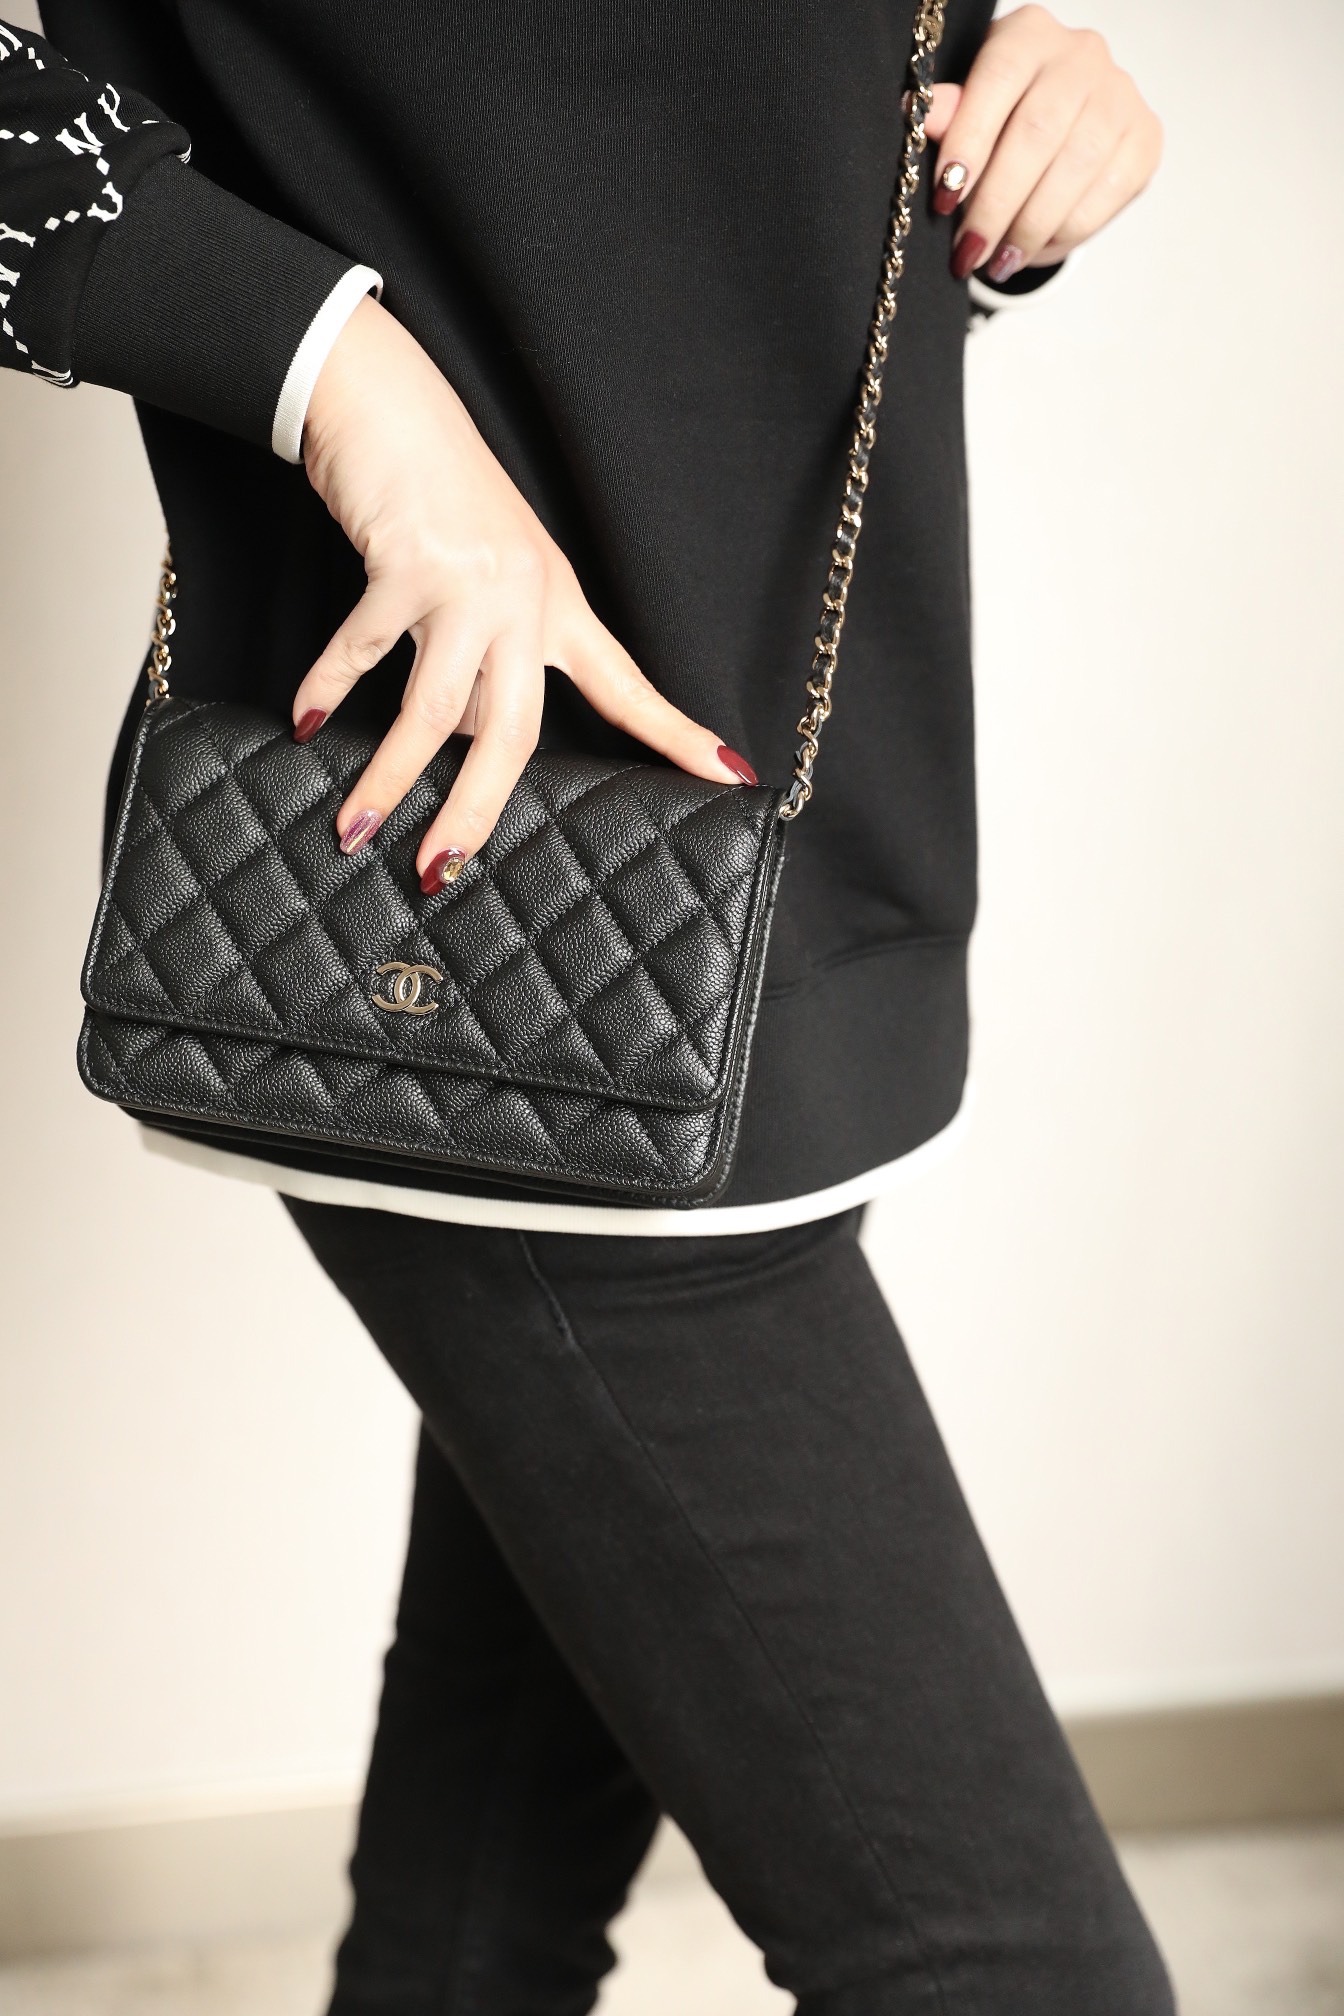 New Copy Chanel Woc Wallet On Chain Shoulder Bag Black